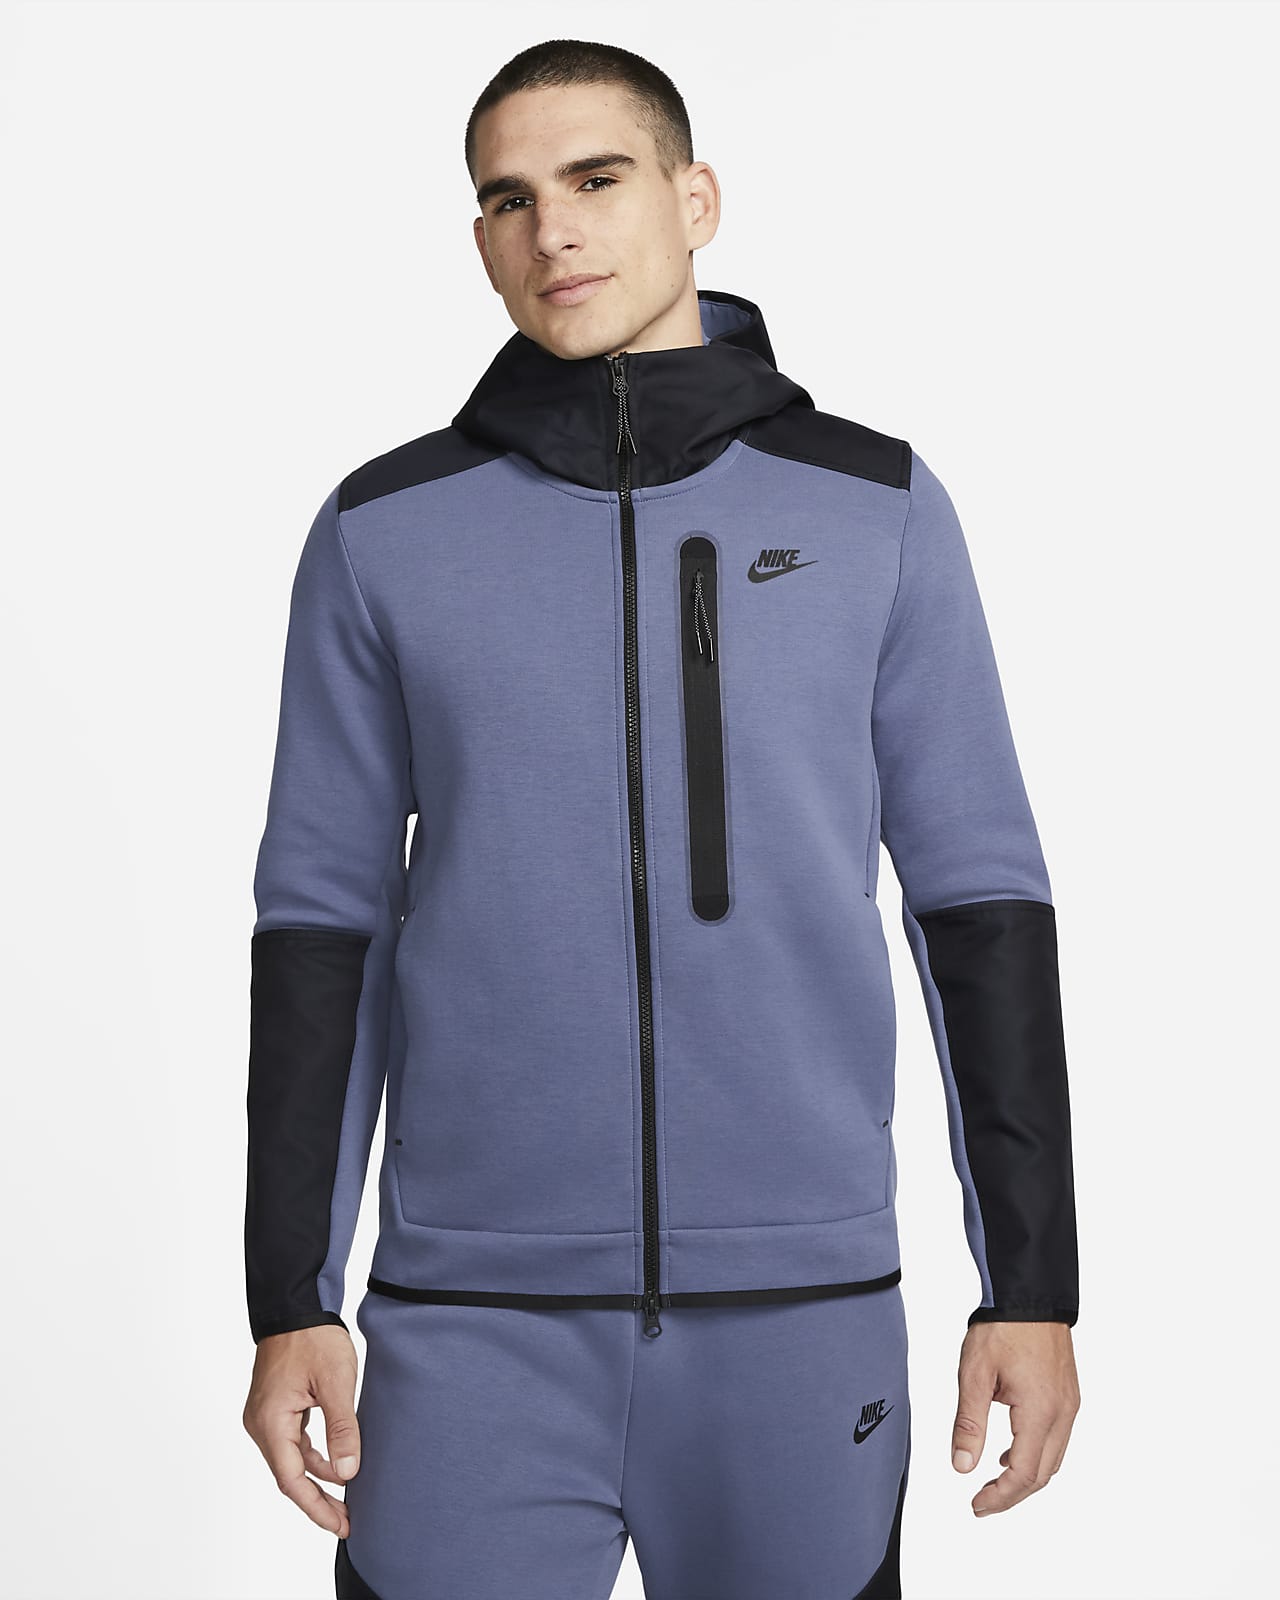 bosque persona que practica jogging mentiroso Nike Sportswear Tech Fleece Men's Full-Zip Top. Nike LU